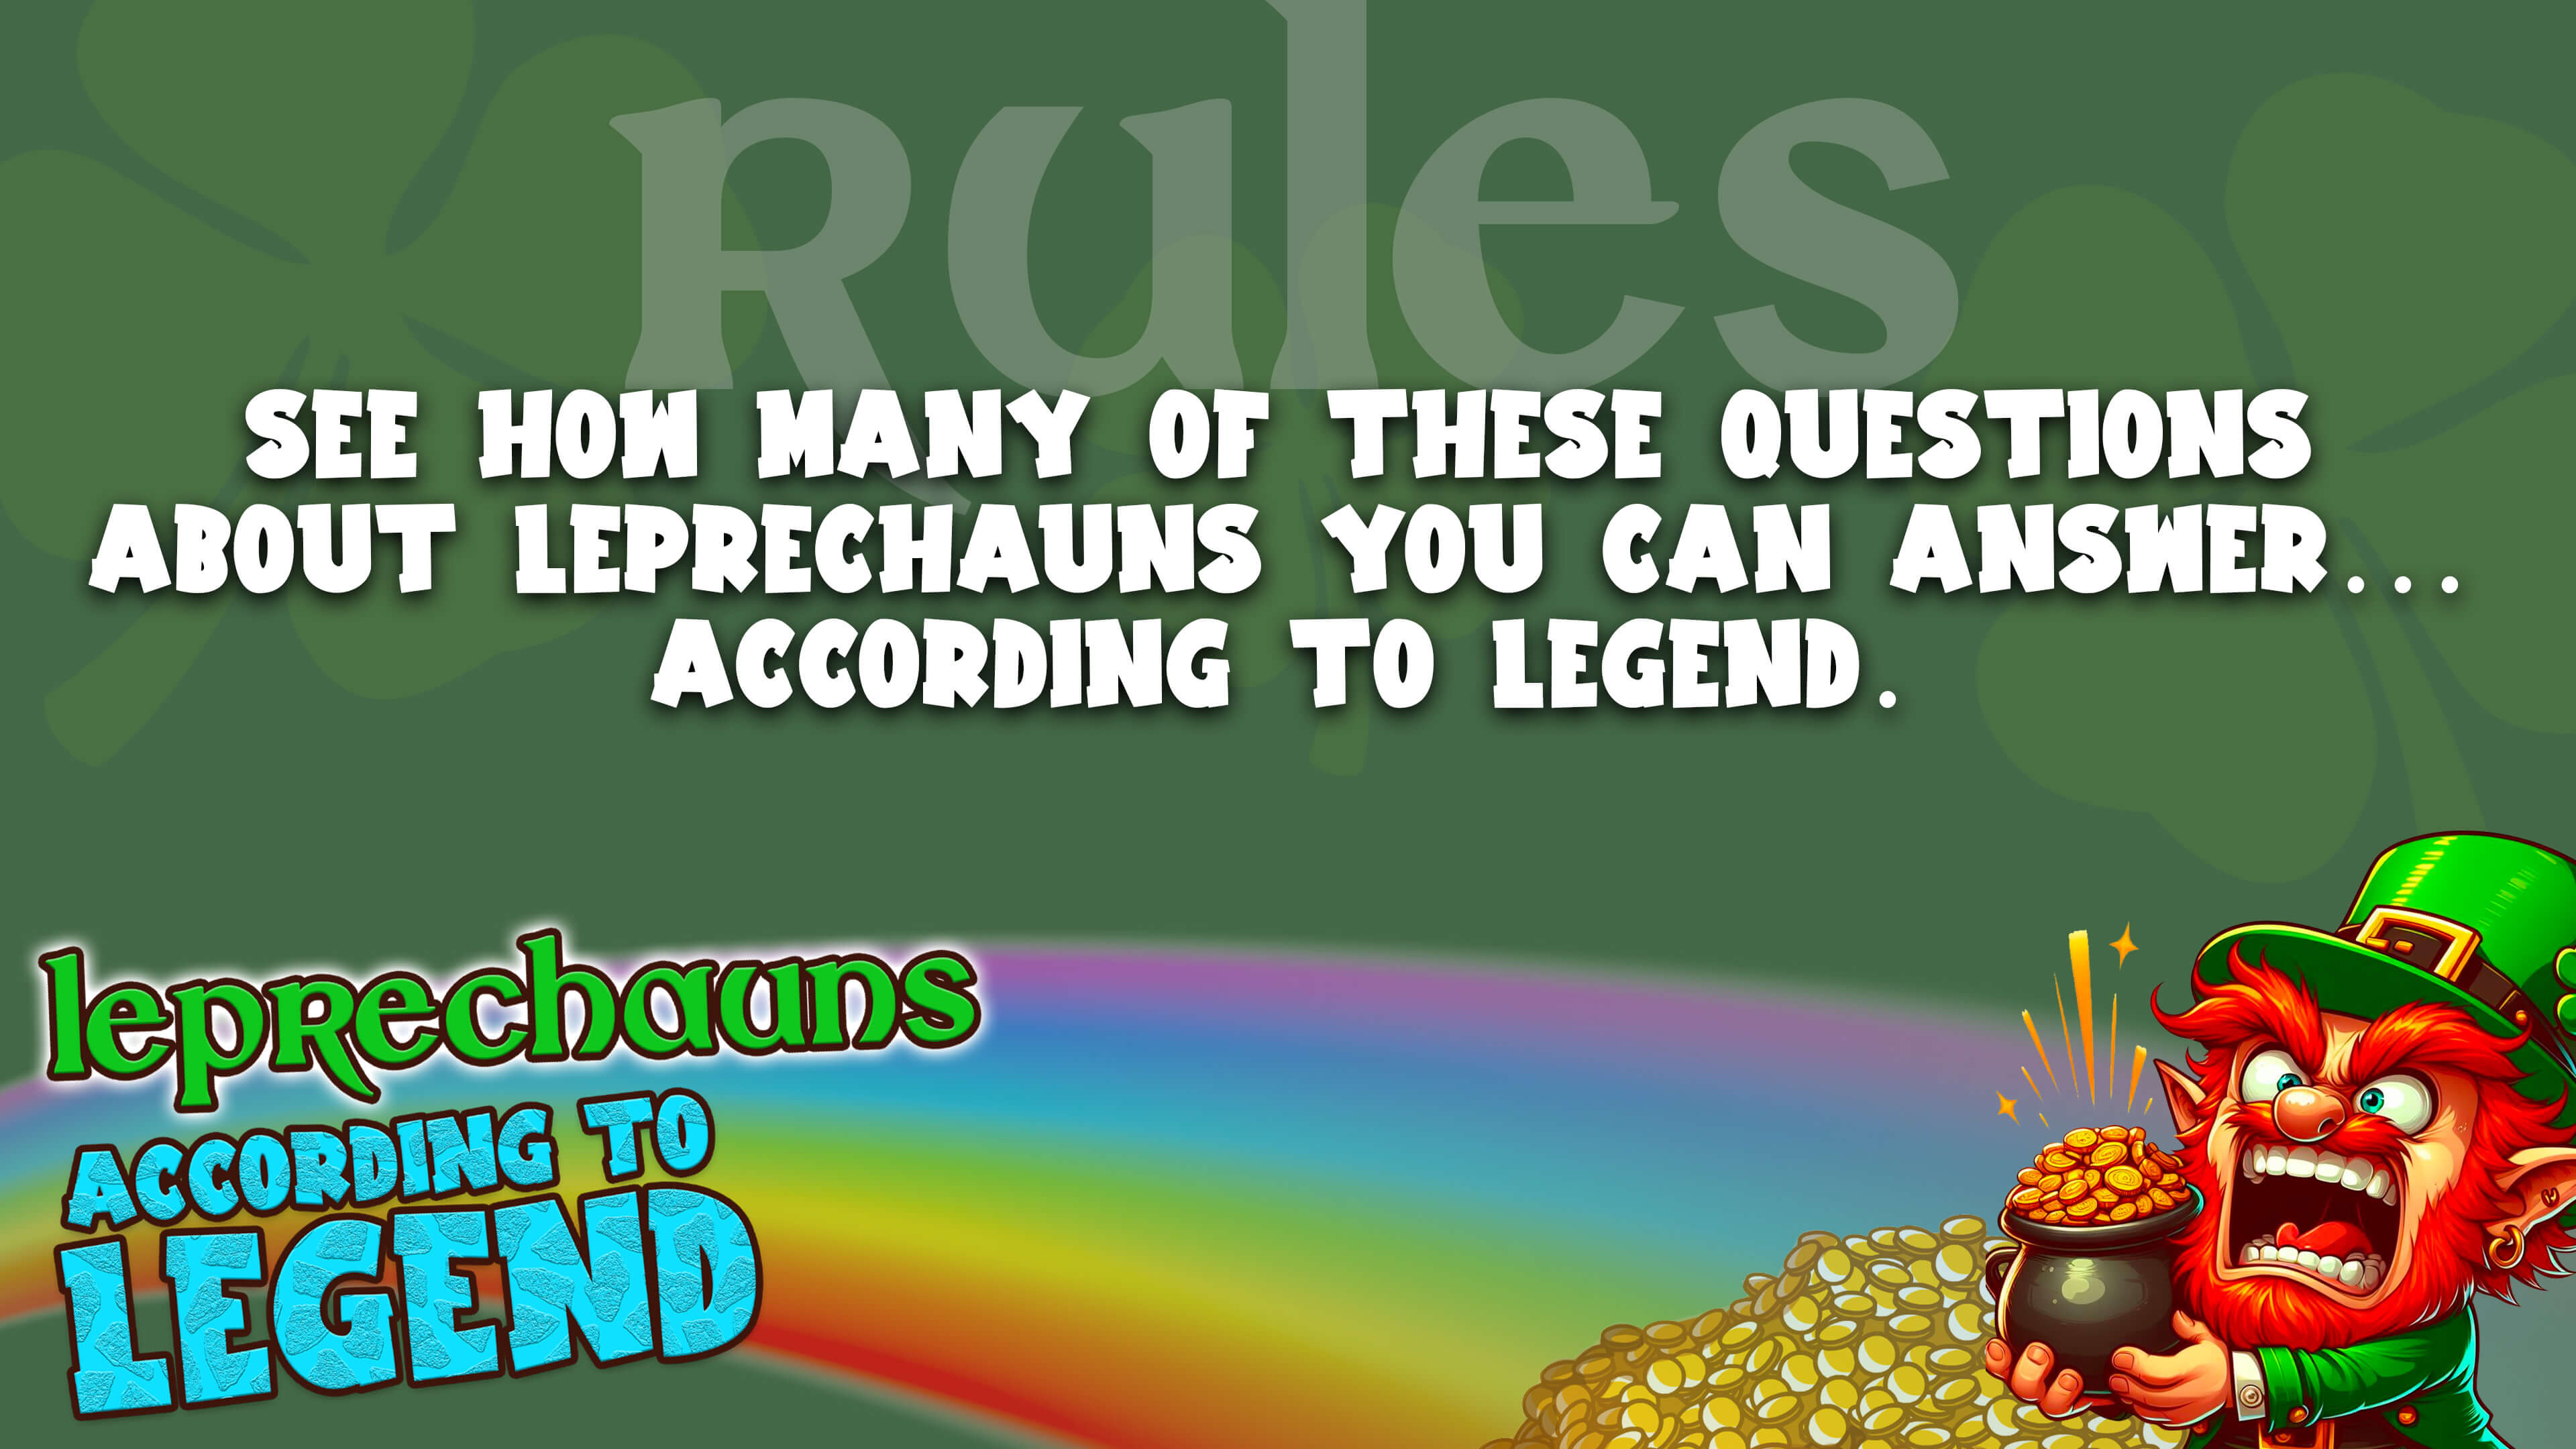 Leprechauns: According to Legend